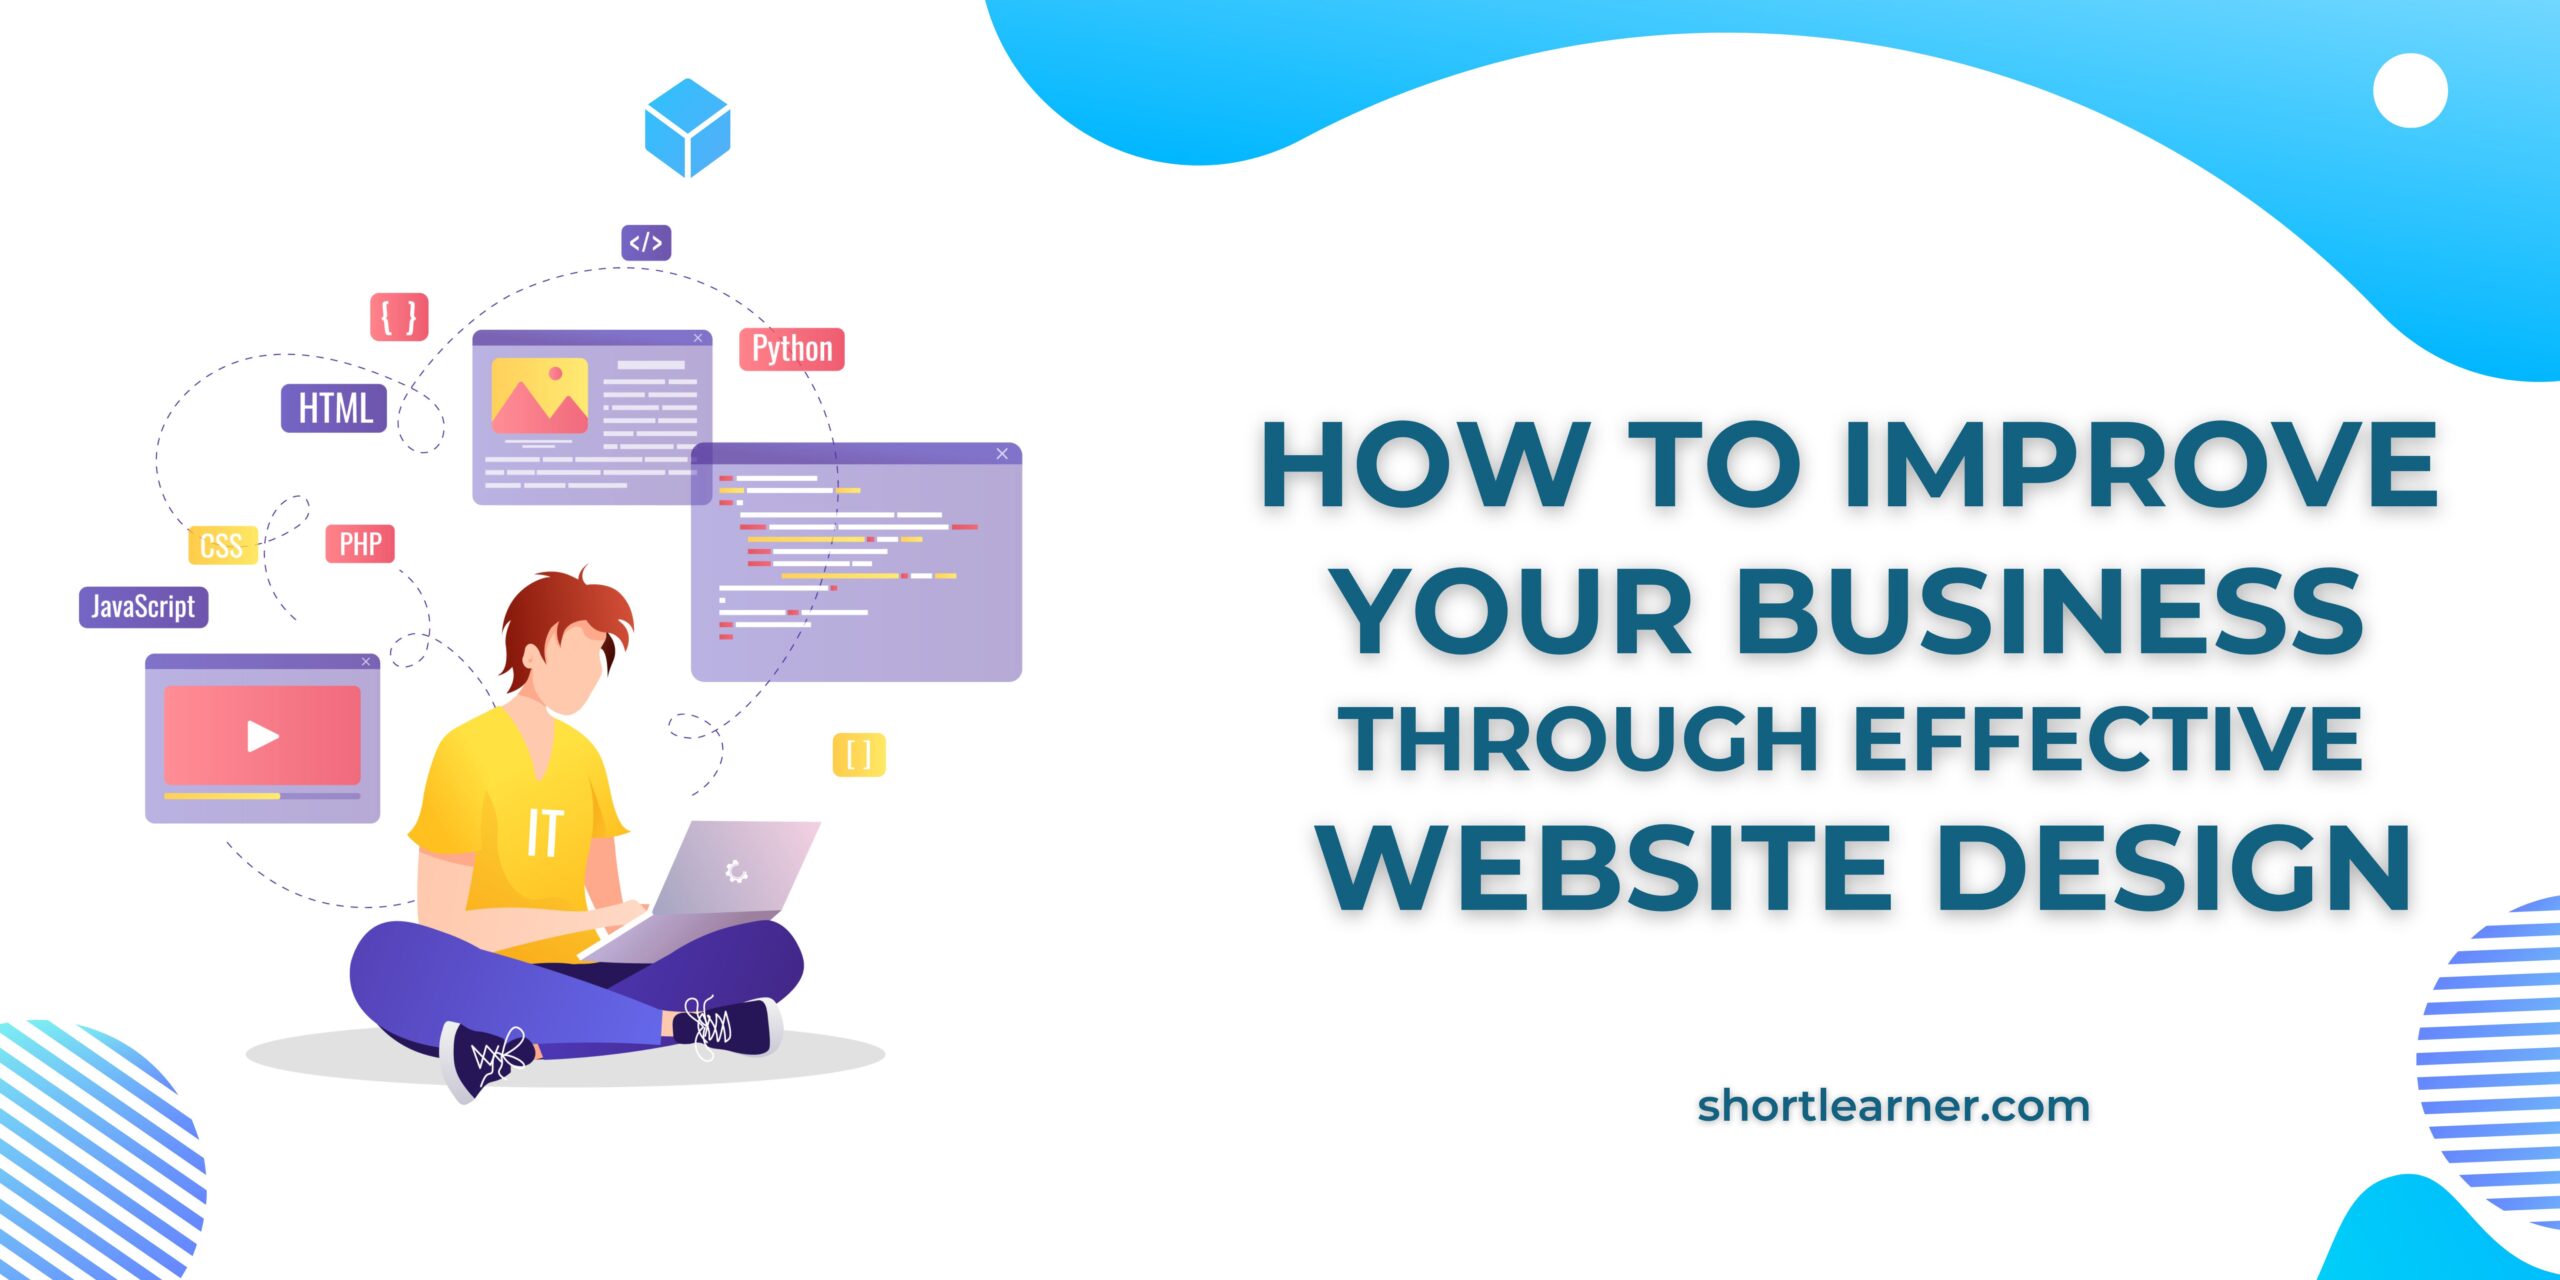 Website Design: Improve Your Business